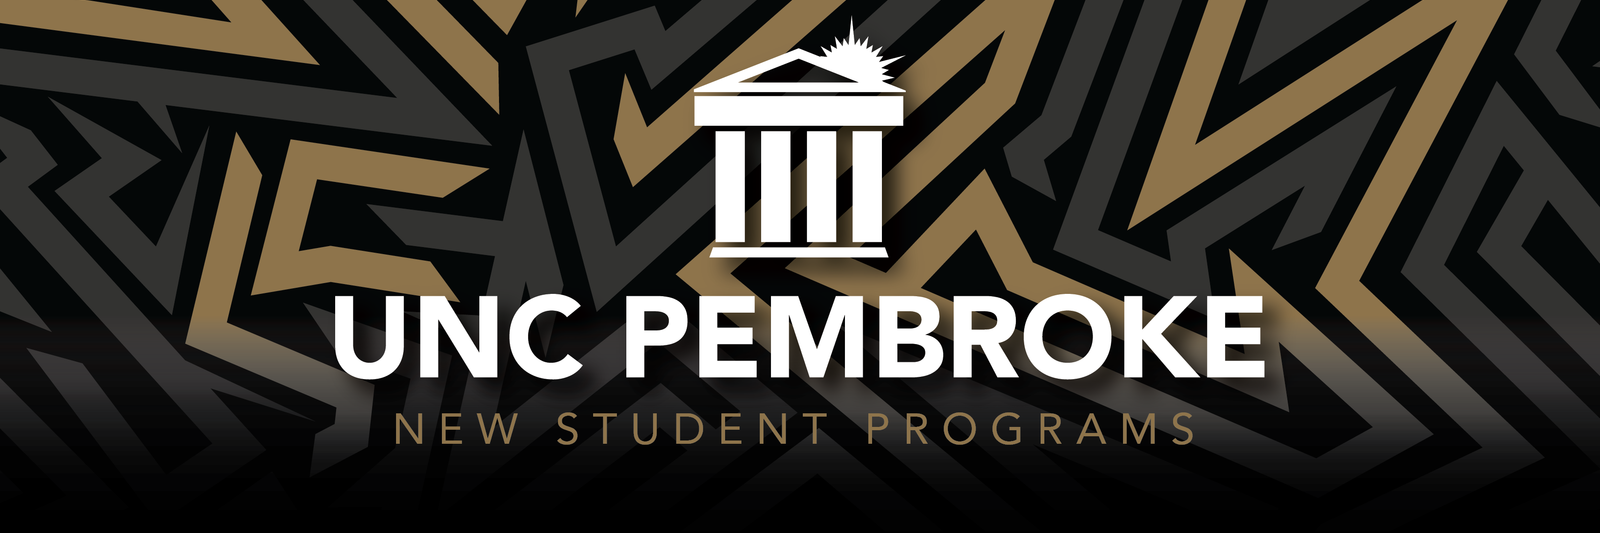 UNC Pembroke New Student Programs 